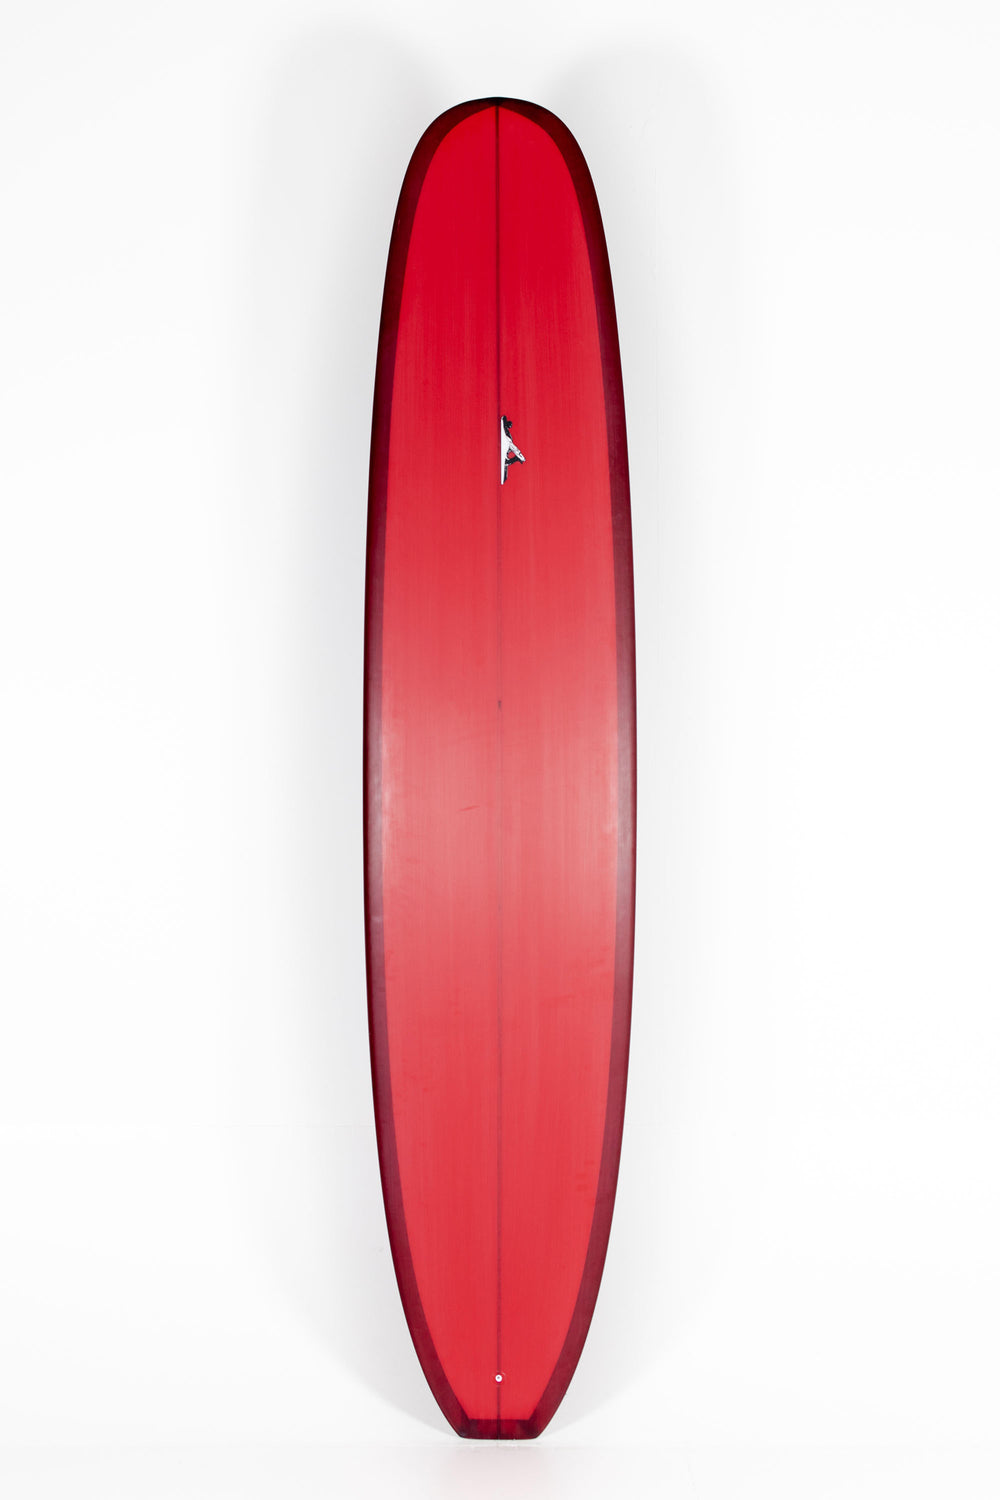 Pukas Surf Shop - Thomas Surfboards - STEP DECK - 9'2